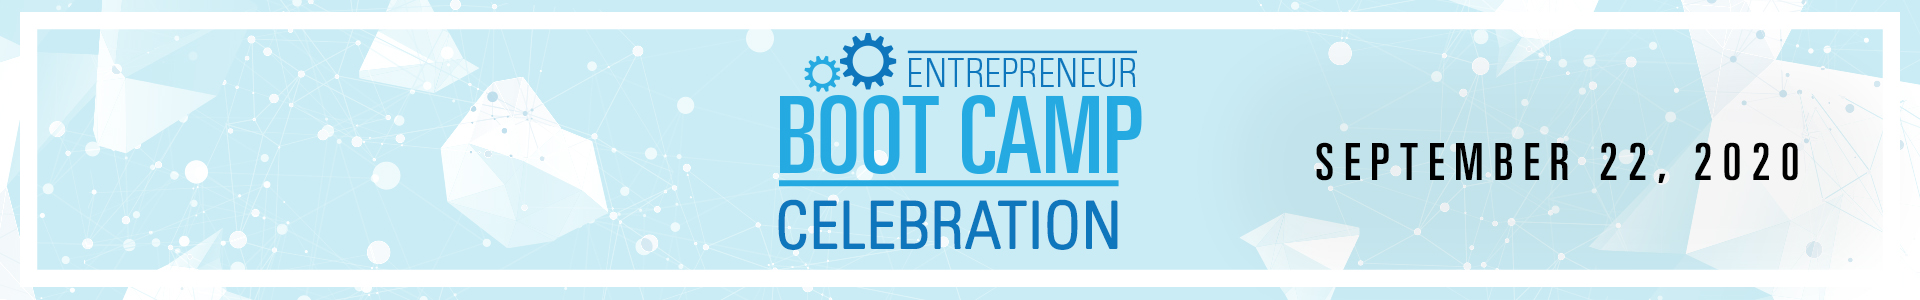 Entrepreneur Boot Camp Celebration